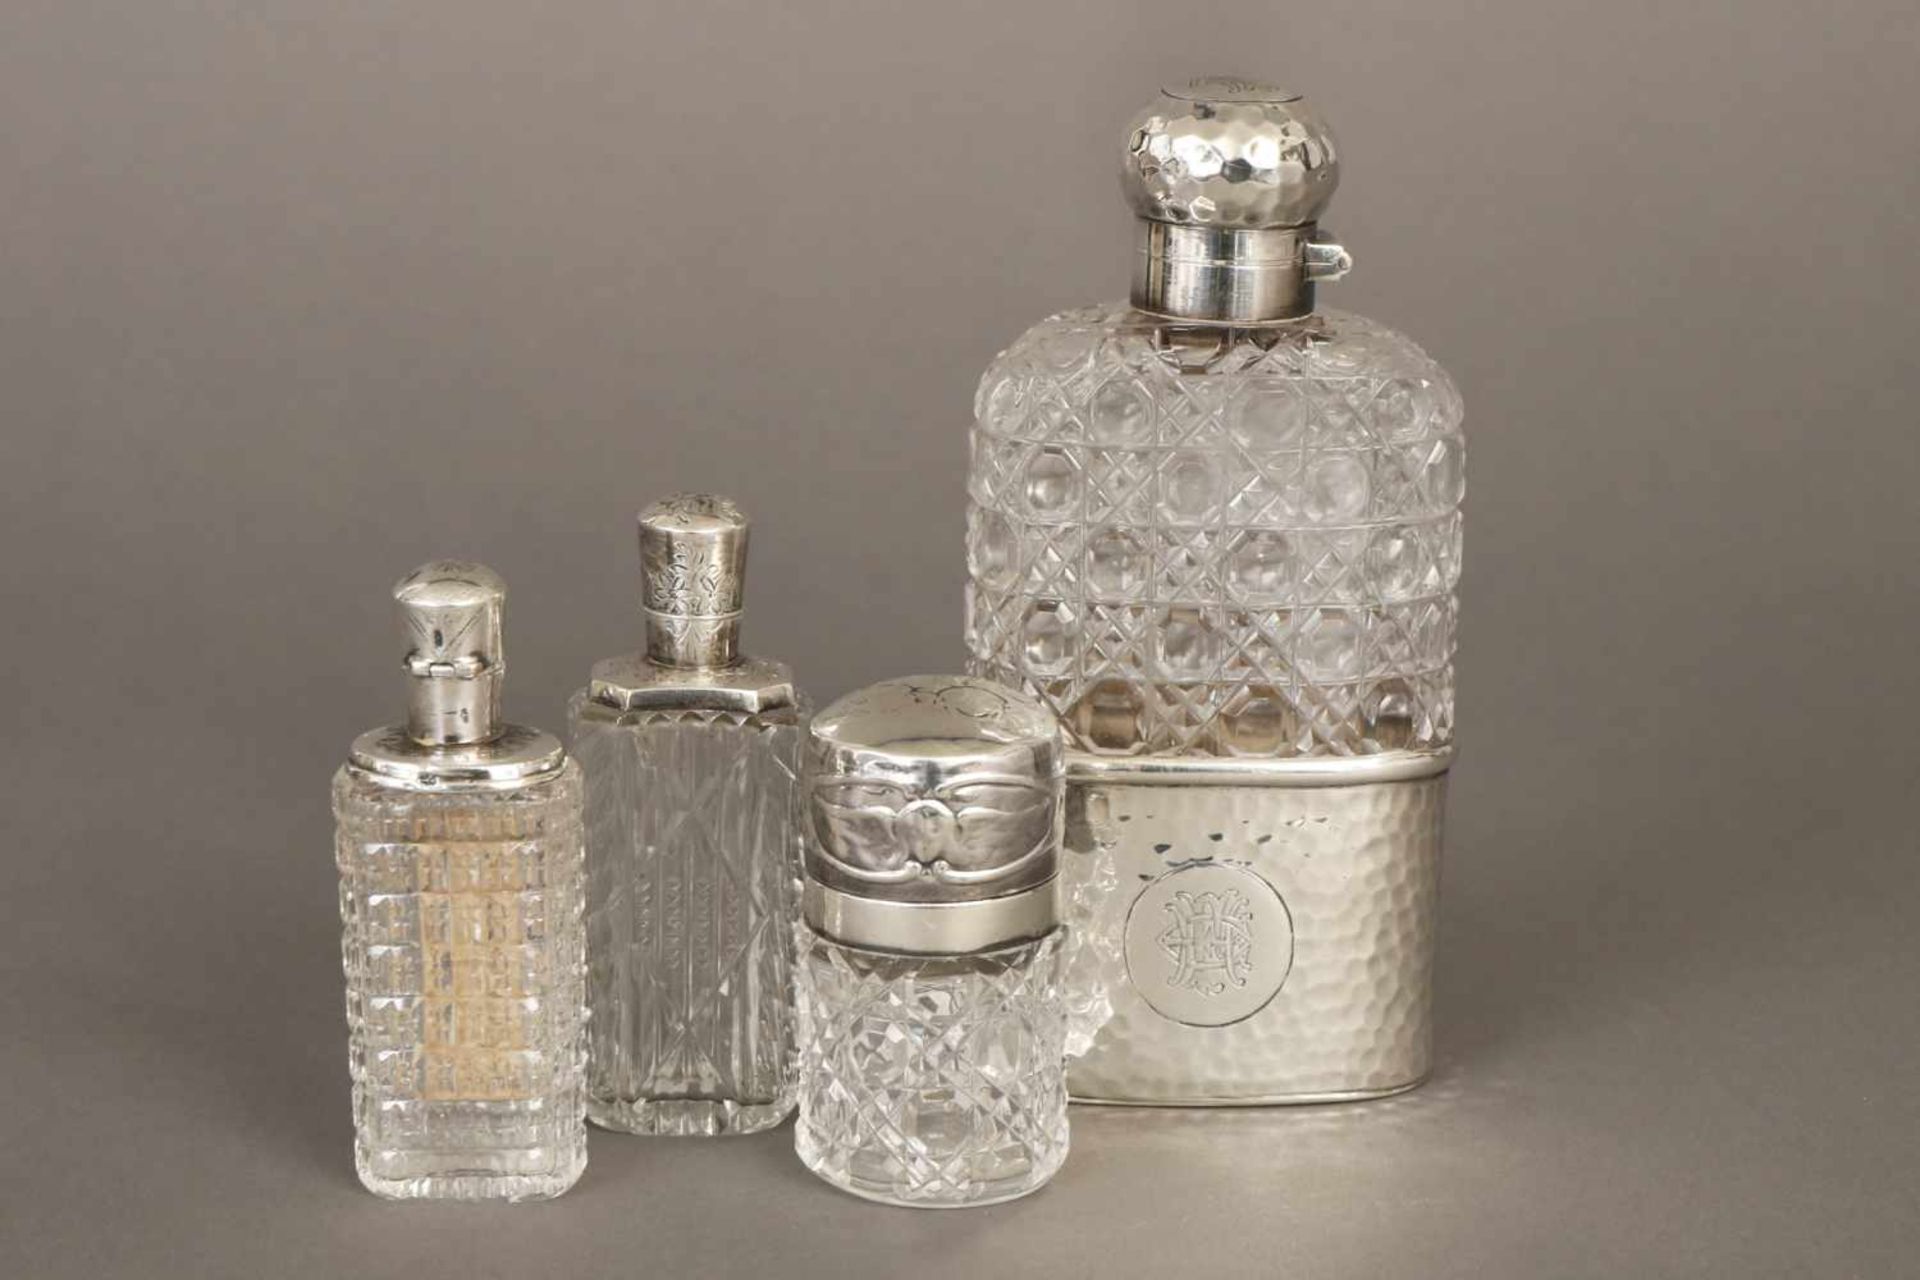 Konvolut Flakons (dazu 1 ¨pocket-flask¨)Kristall und Sterling Silber, England, um 1900-30,